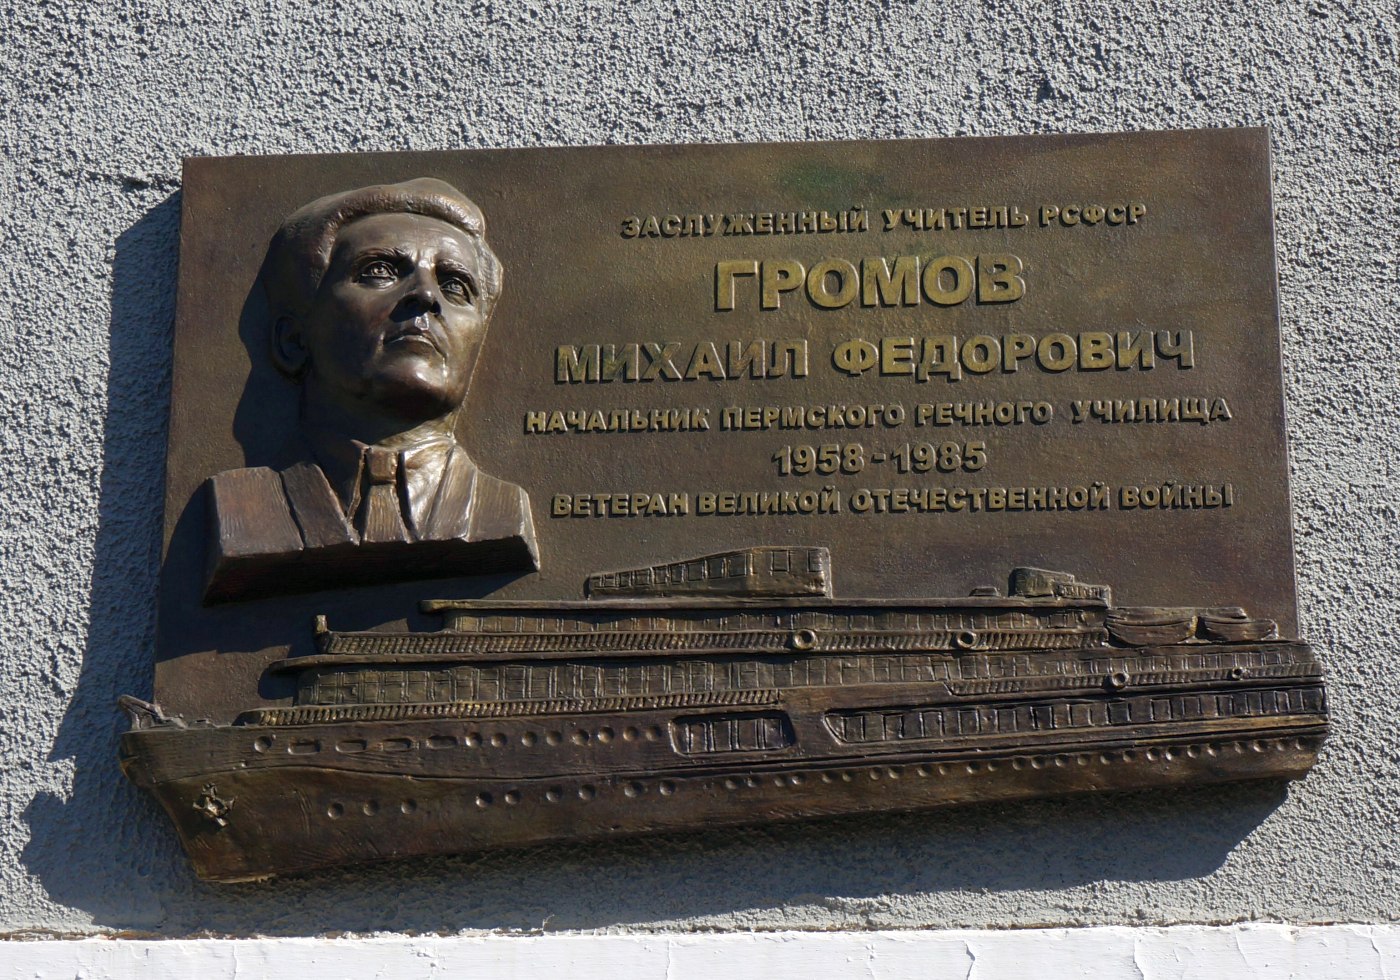 Perm, Бульвар Гагарина, 33. Perm — Memorial plaques